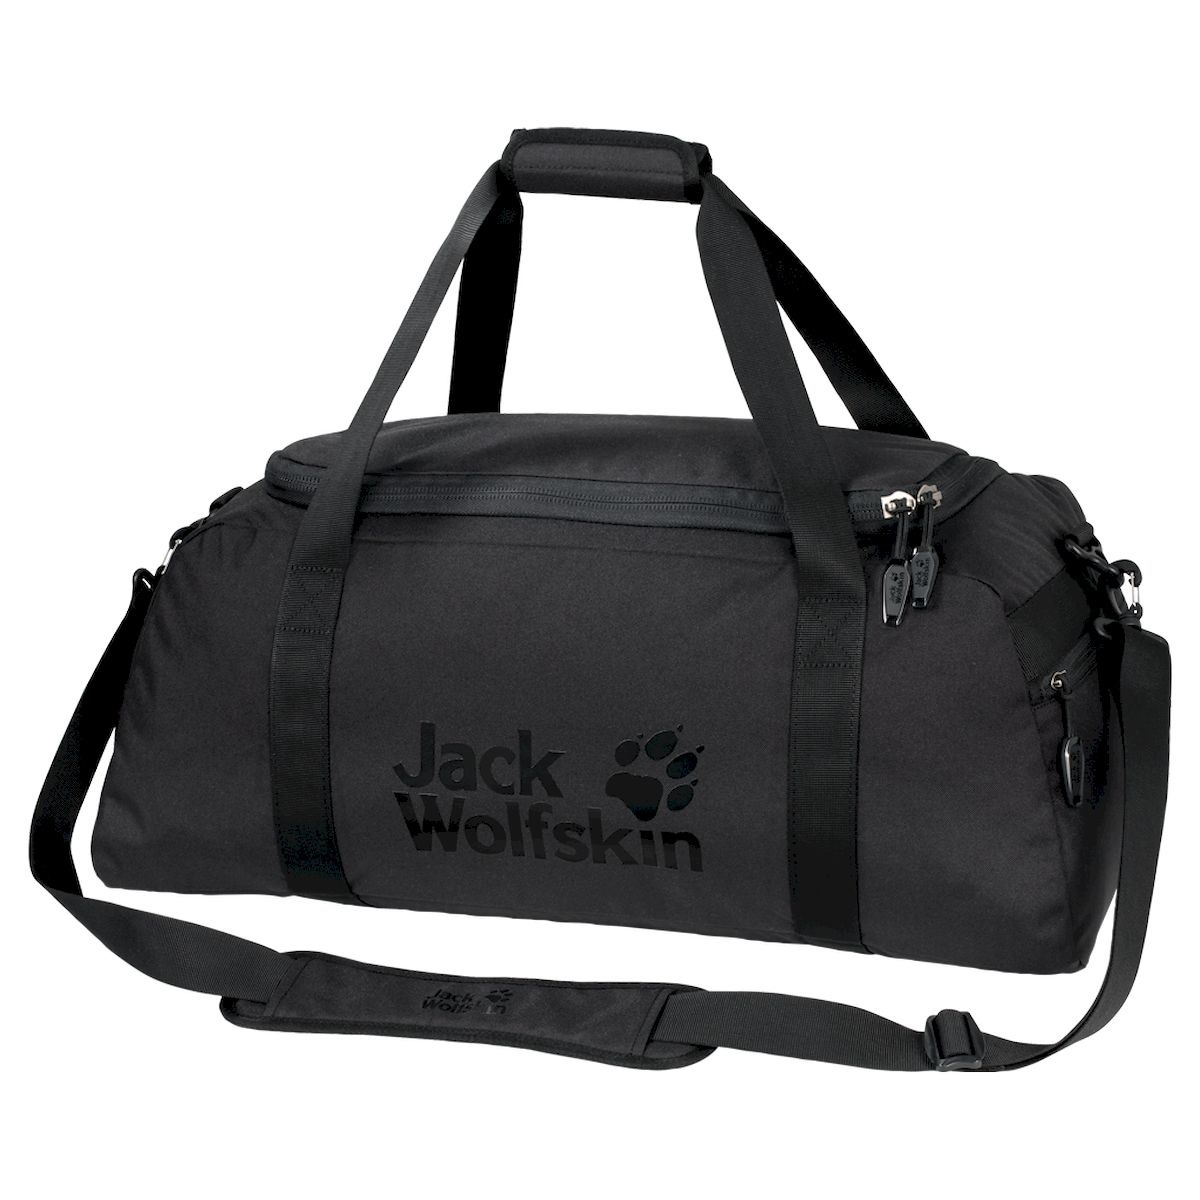 Сумка Jack Wolfskin Action Bag 45, 2007251-6000, черный